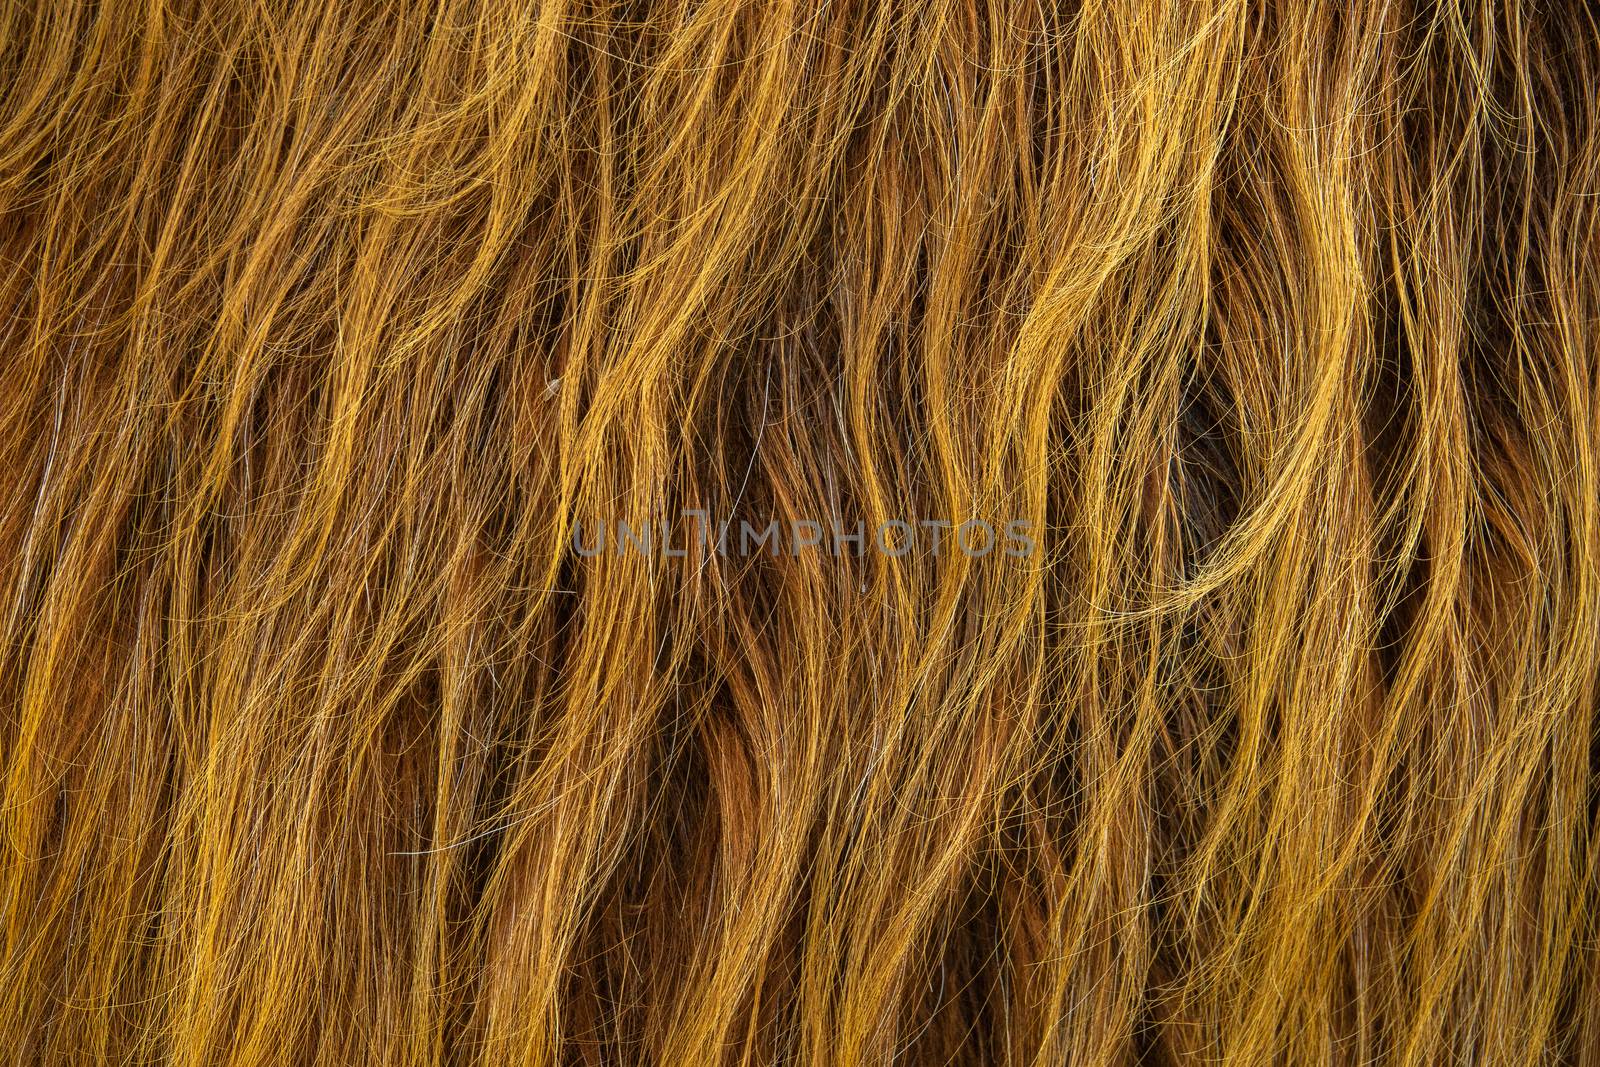 Scottish Highland Cow Hair Background by mrdoomits